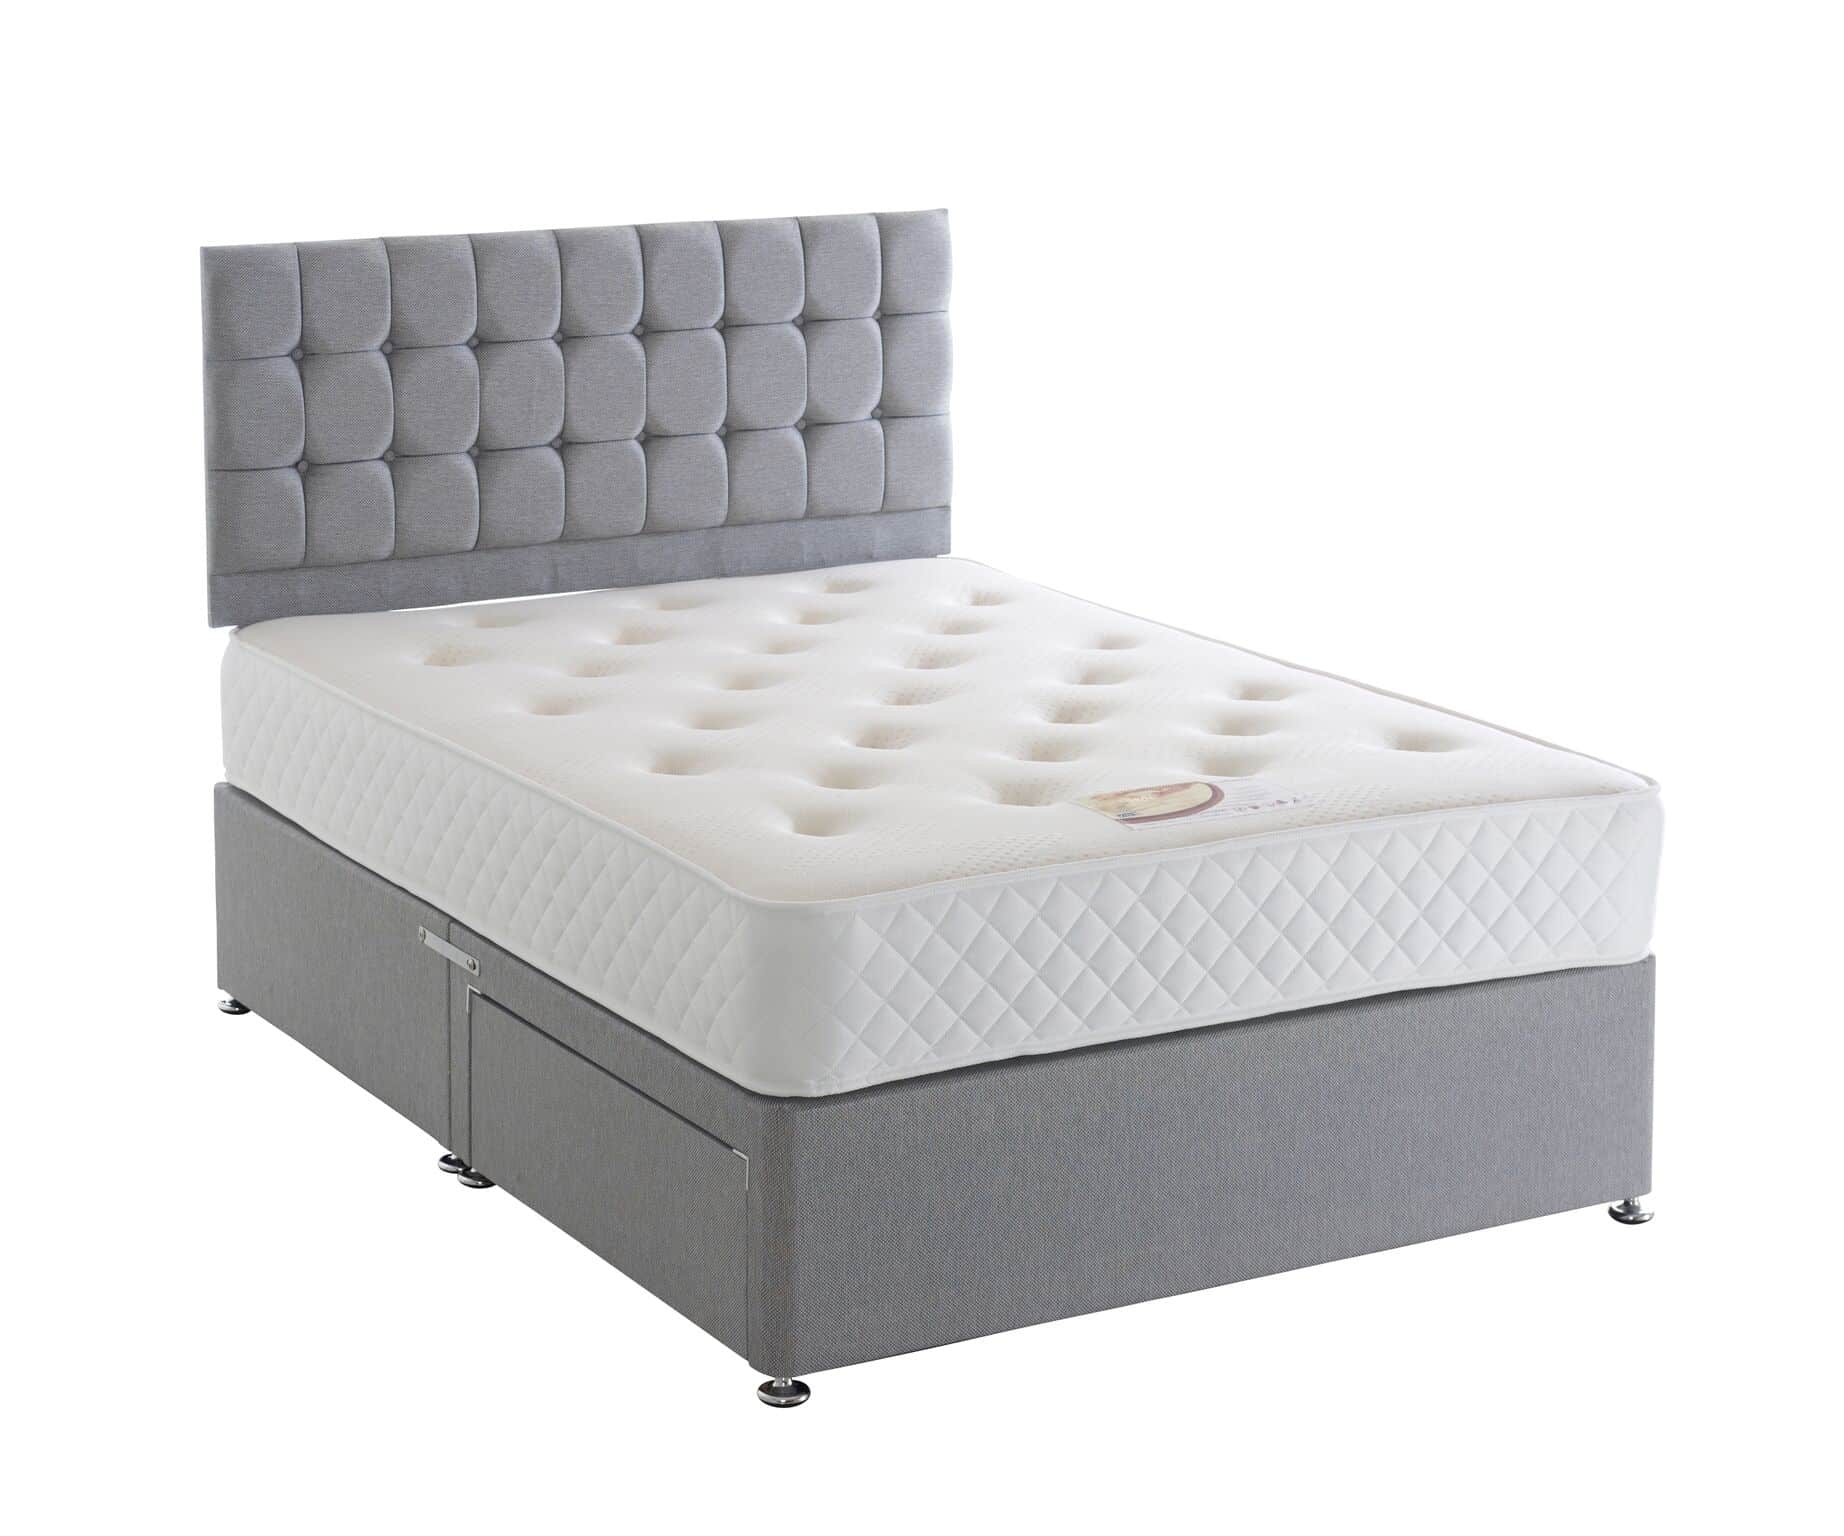 Dura Beds – Elastacoil Divan Bed Set – King Size – Divan Bed Base With Elastacoil Medium Firmness Mattress